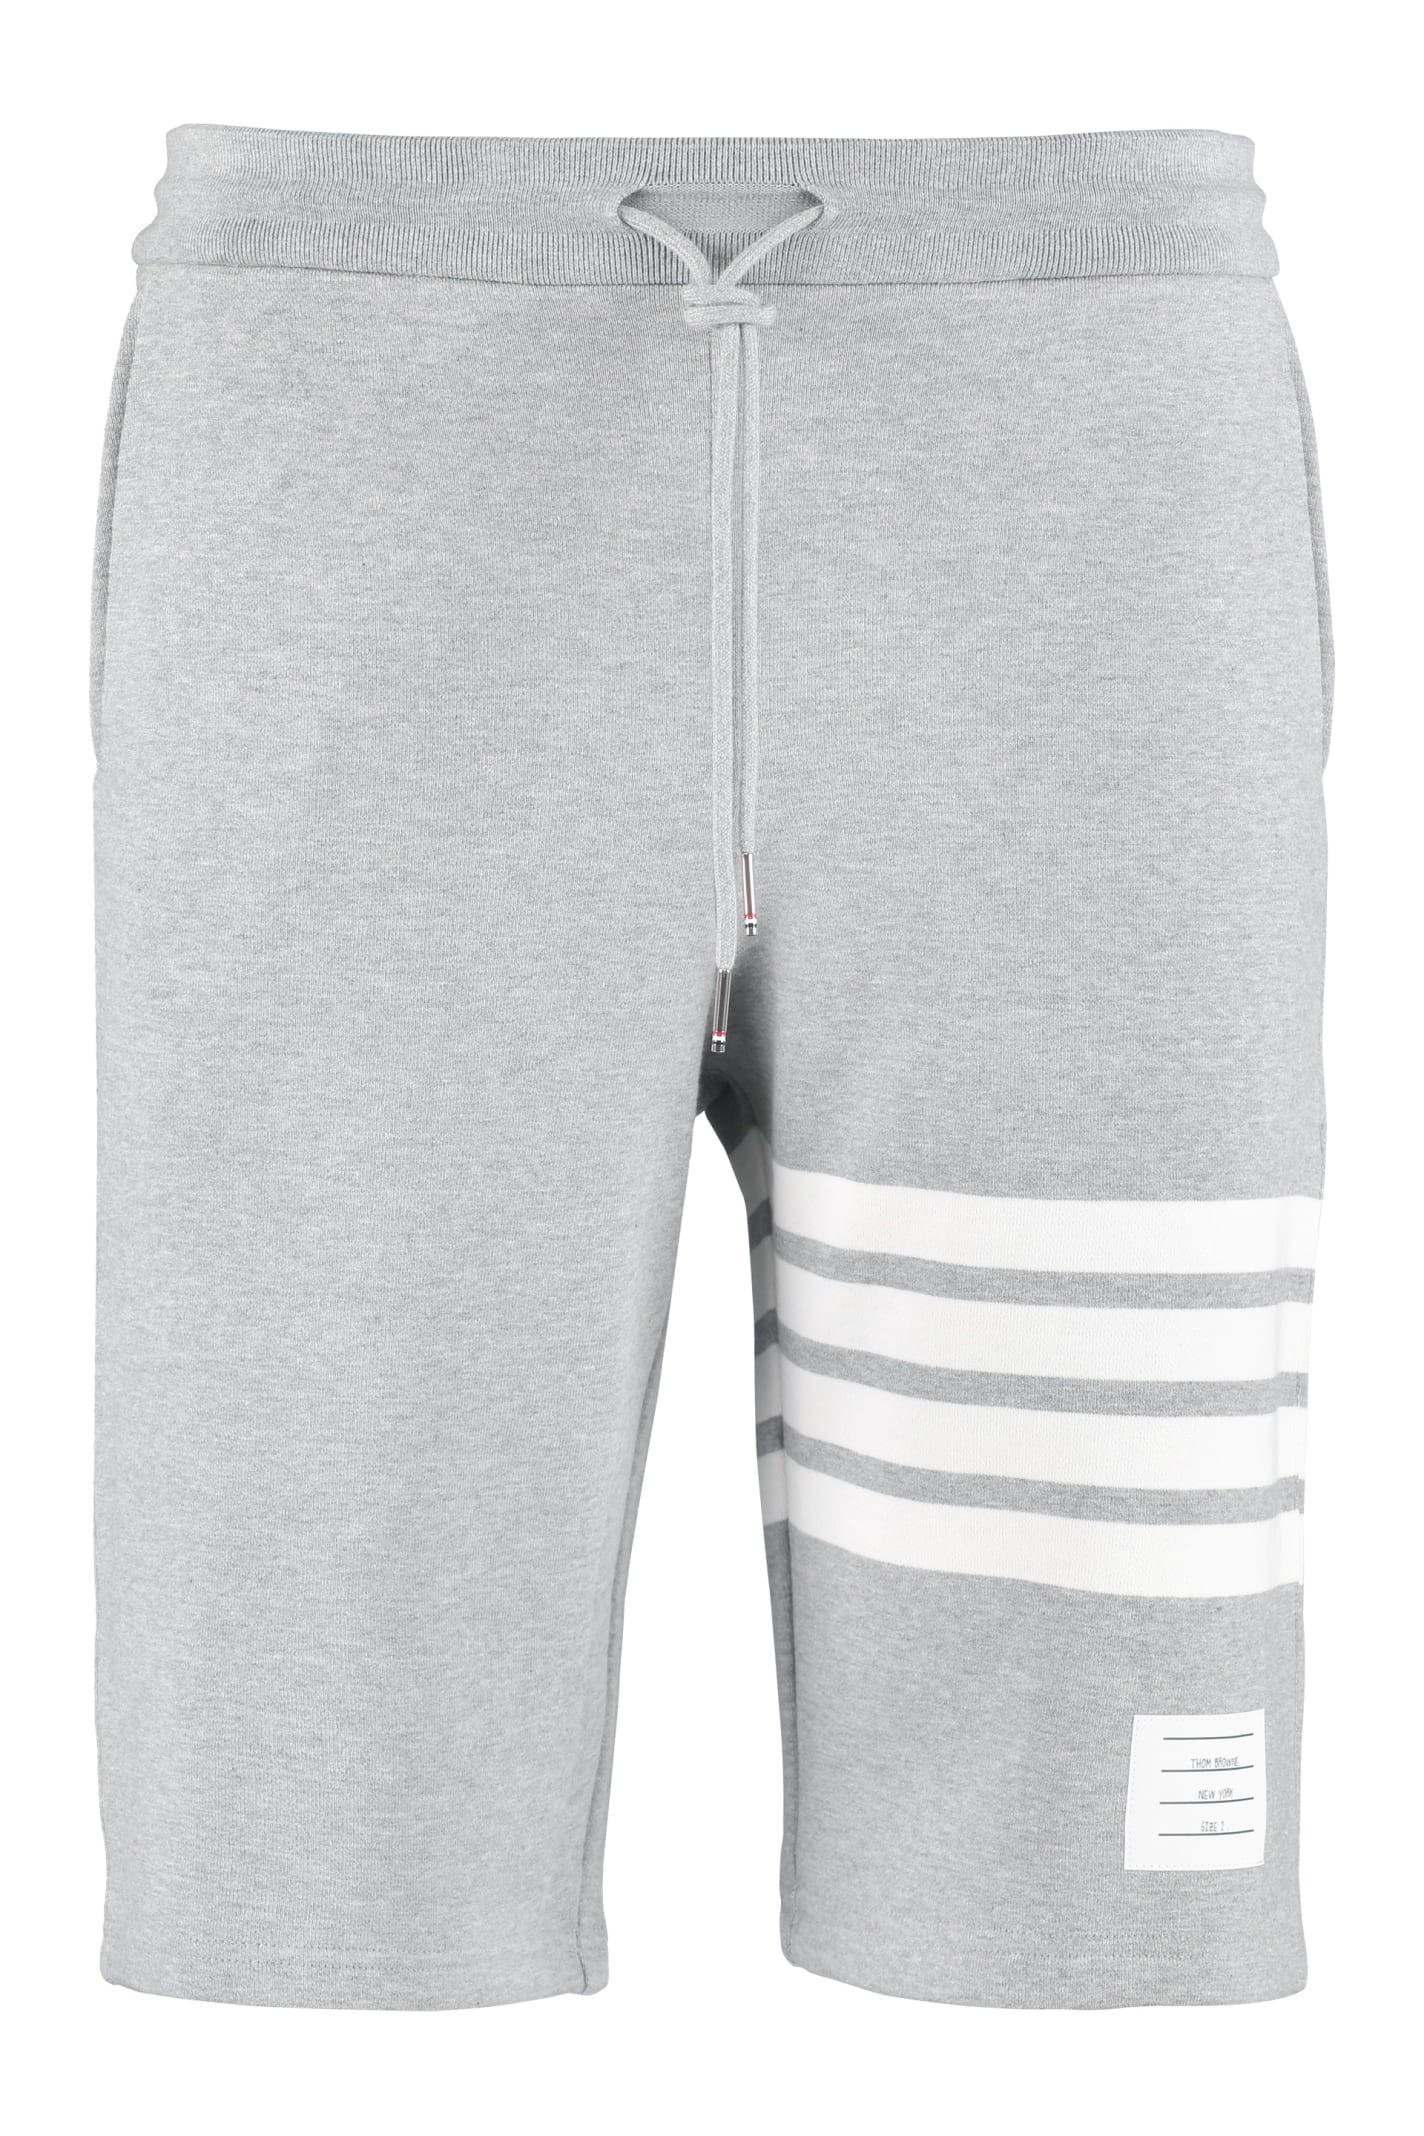 Thom Browne Stripe Detail Fleece Shorts